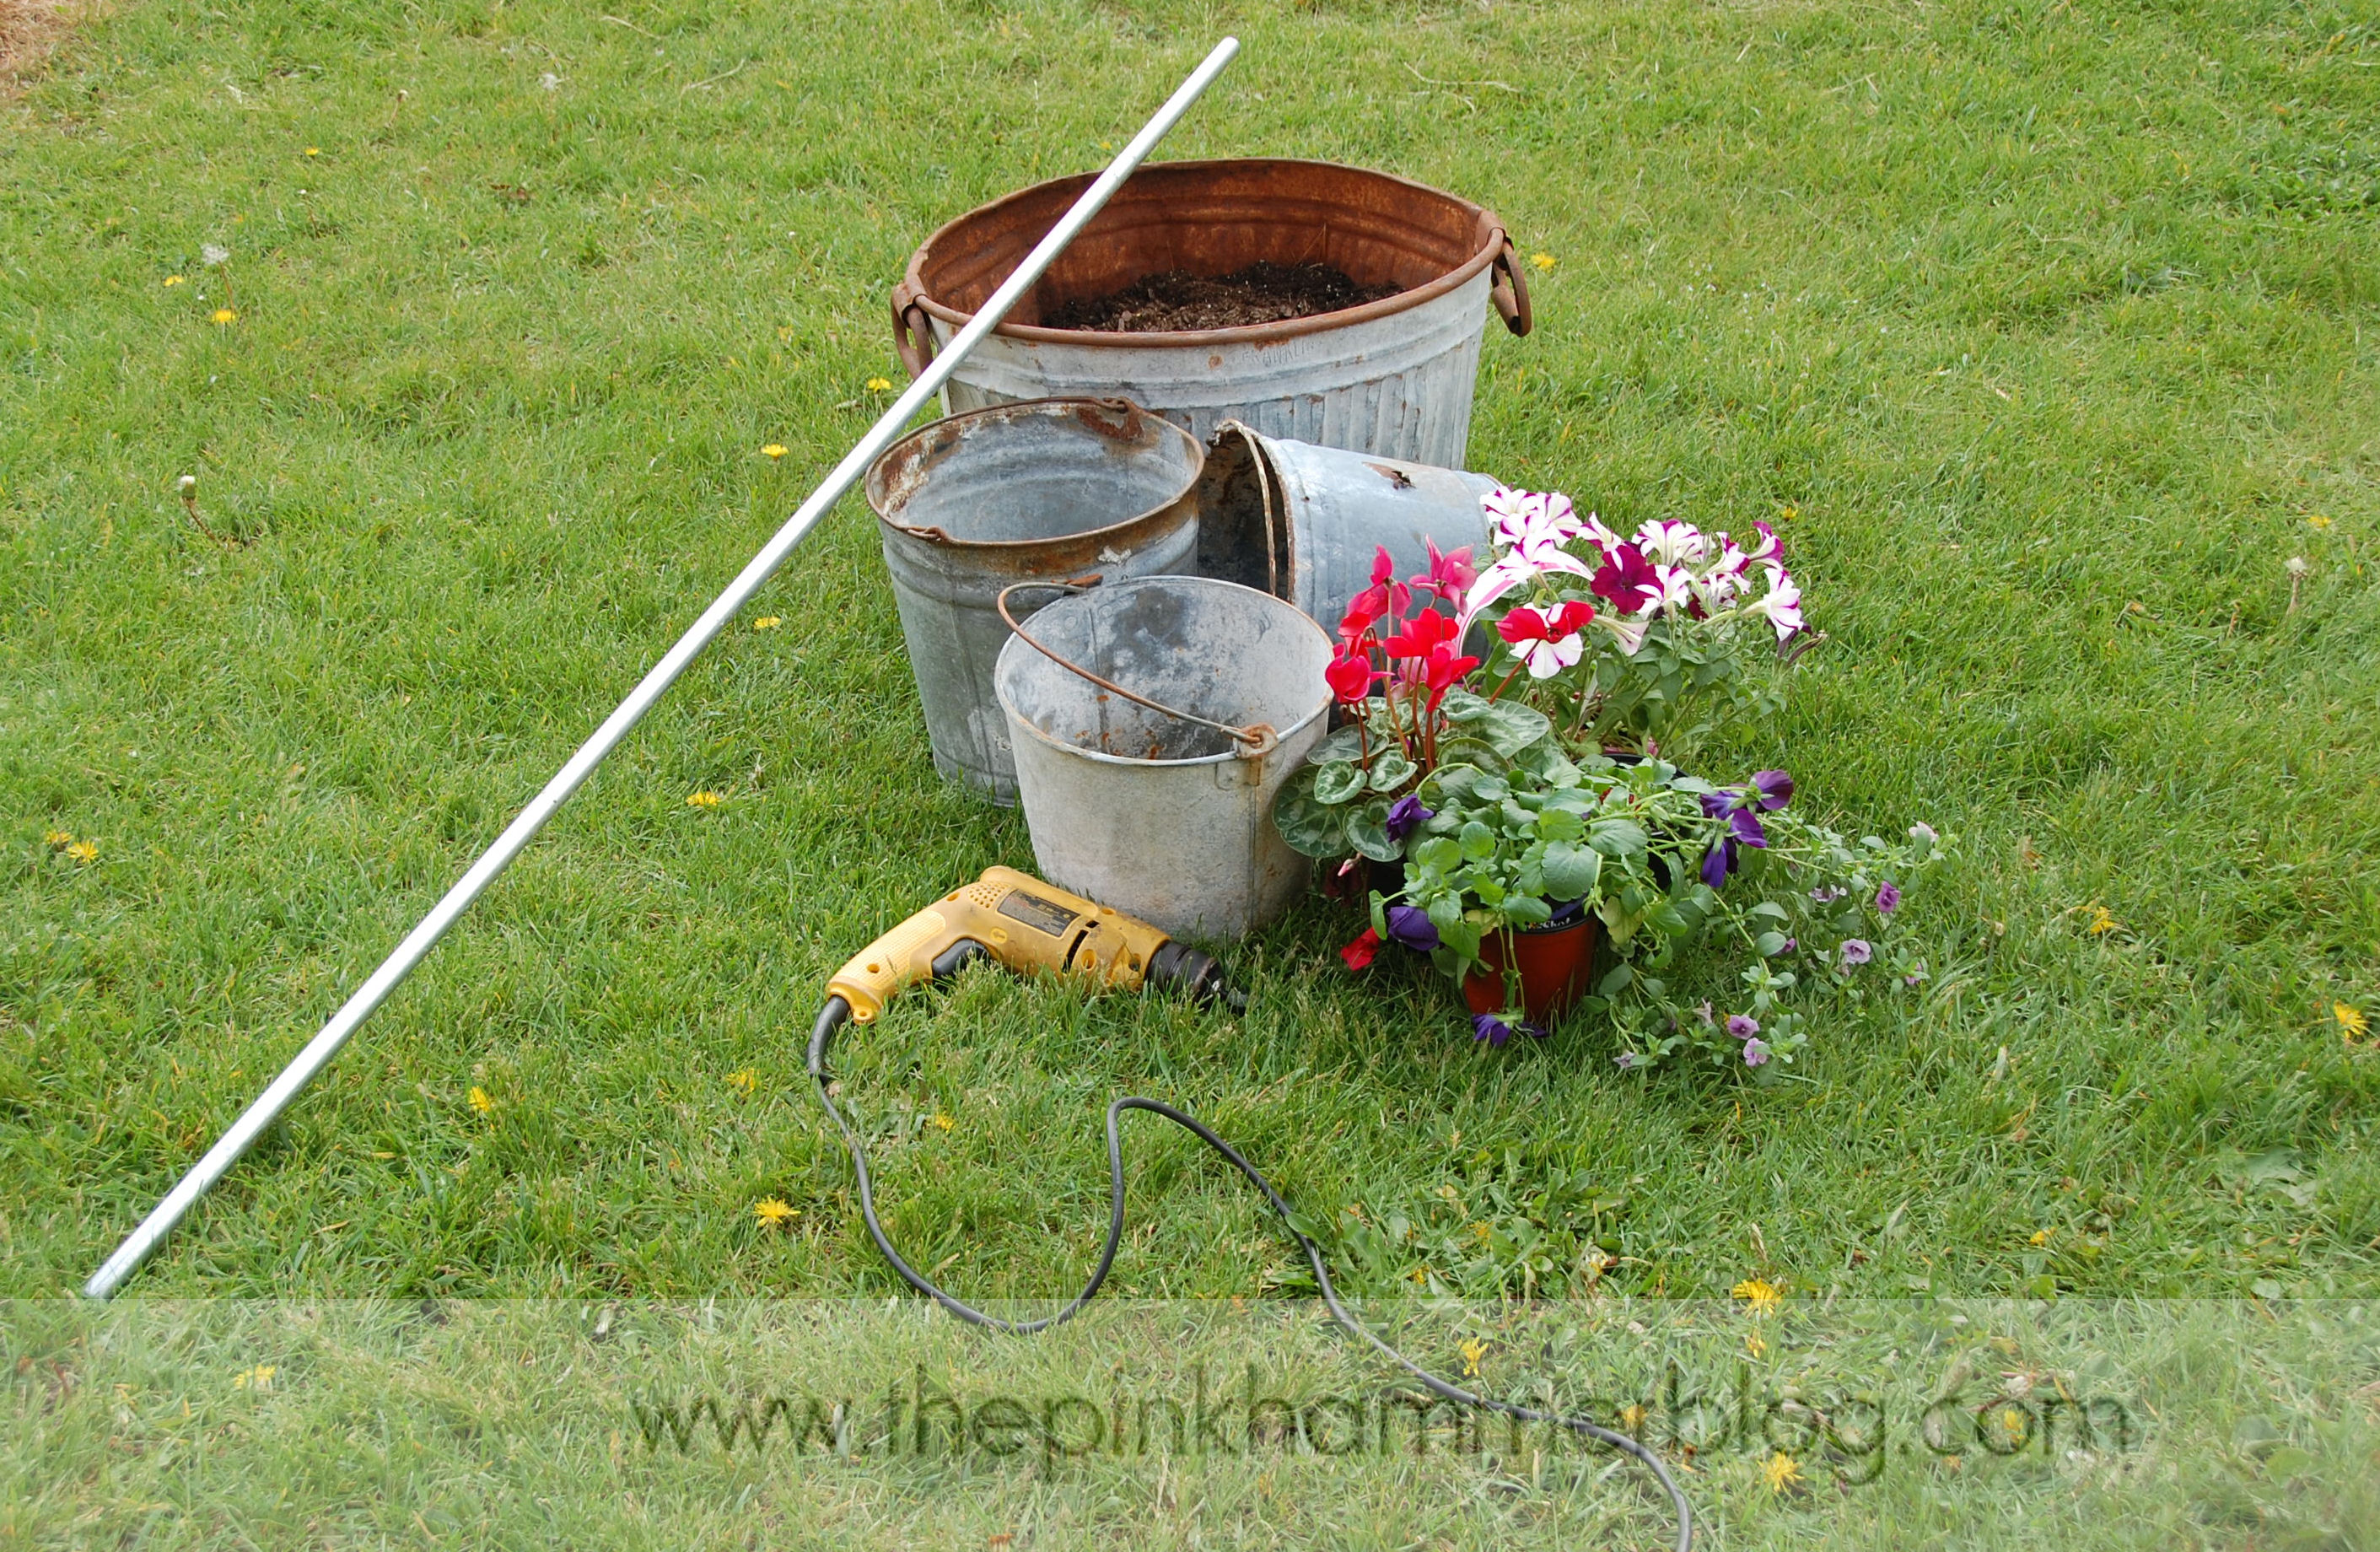 Primitive tipsy pot planters | DIY Rustic garden decor. | The Pink ...